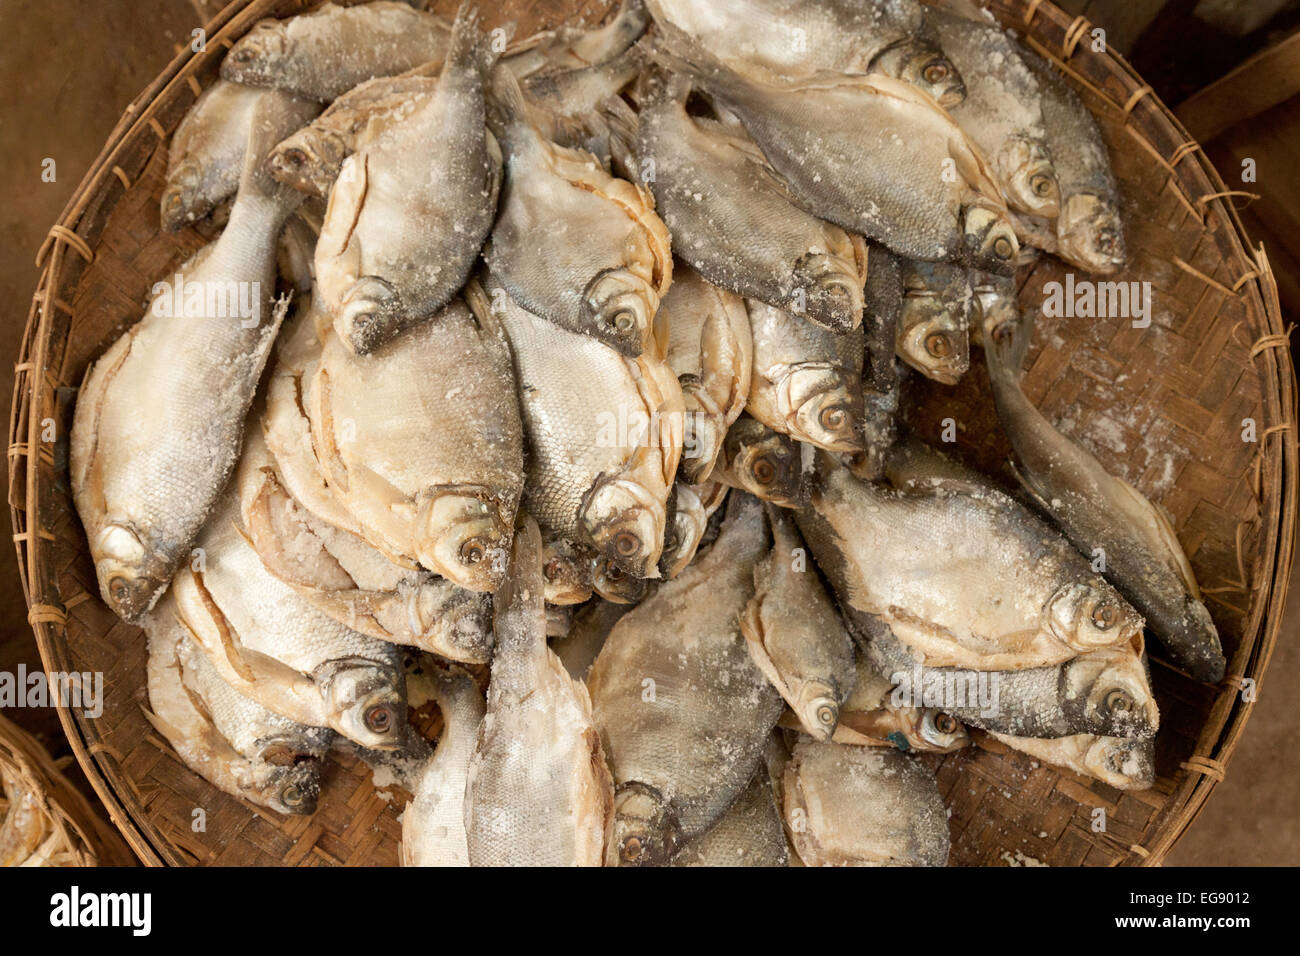 Dried fish for sale in Mani Sithu market, Nyaung U village, Bagan, Myanmar ( Burma ), Asia Stock Photo